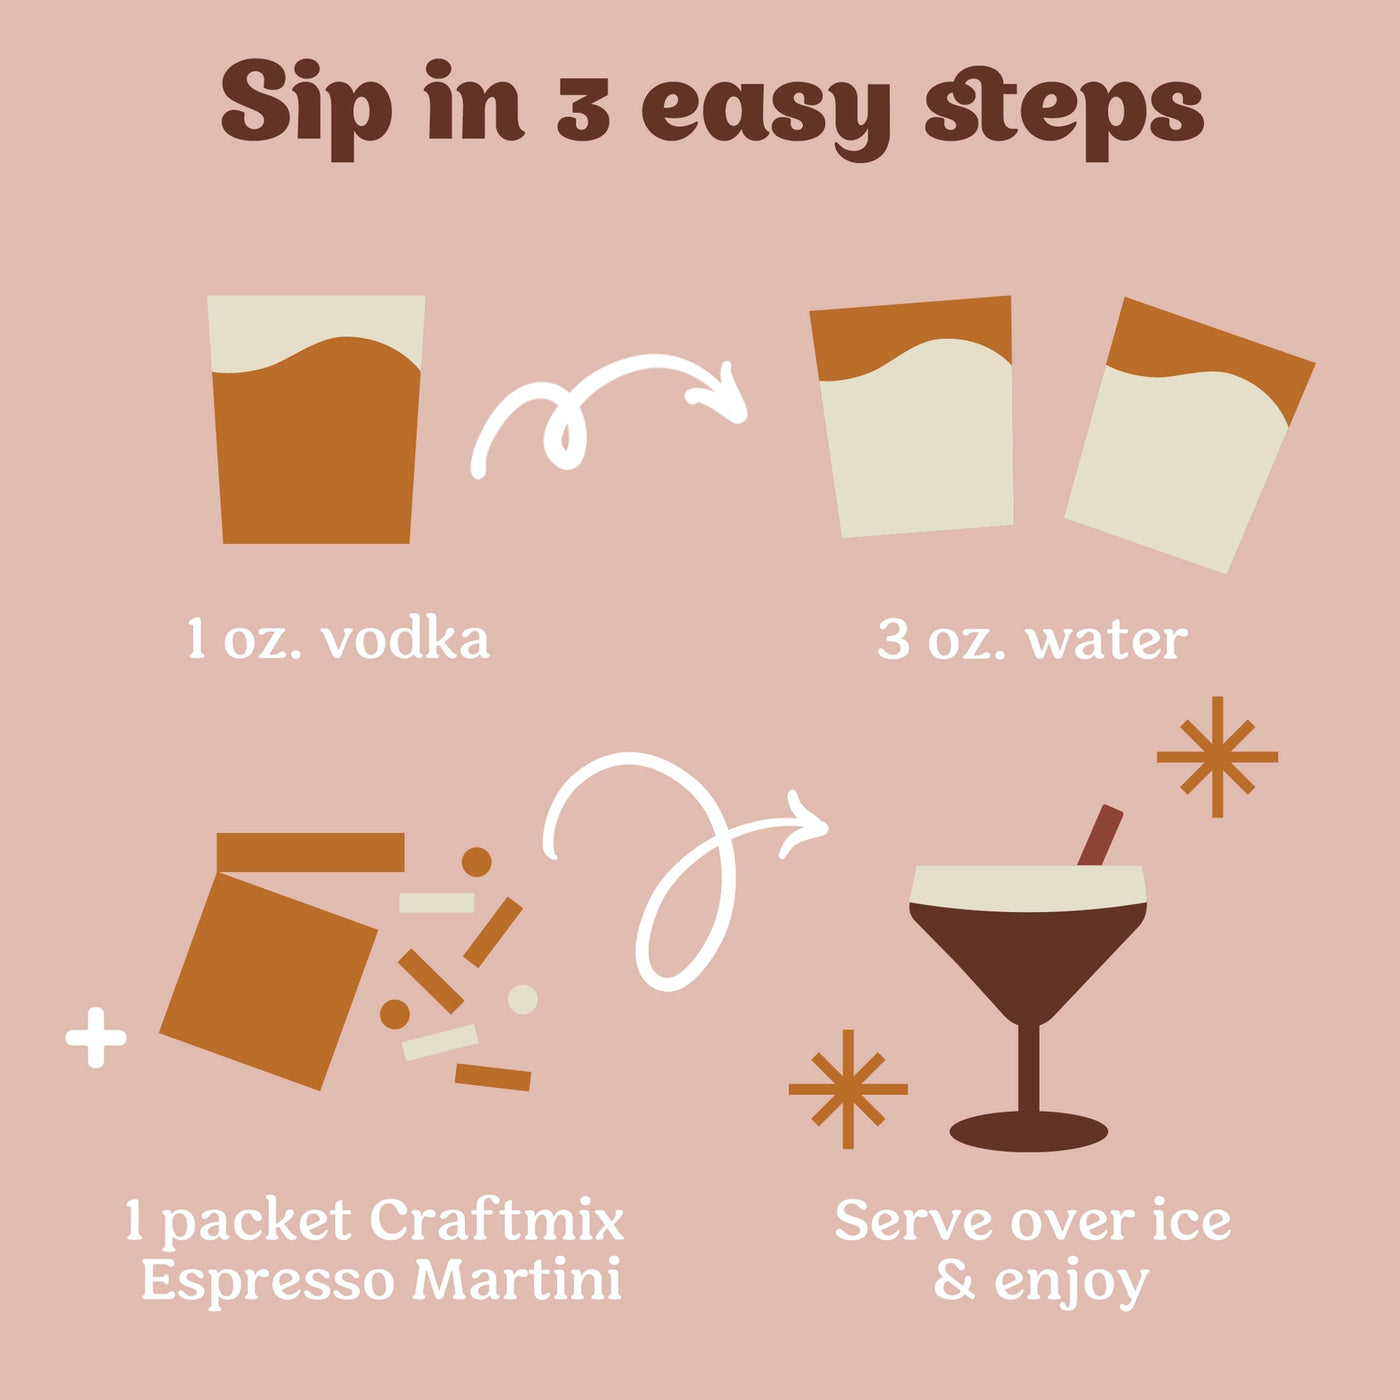 Craftmix Espresso Martini 6 Pack